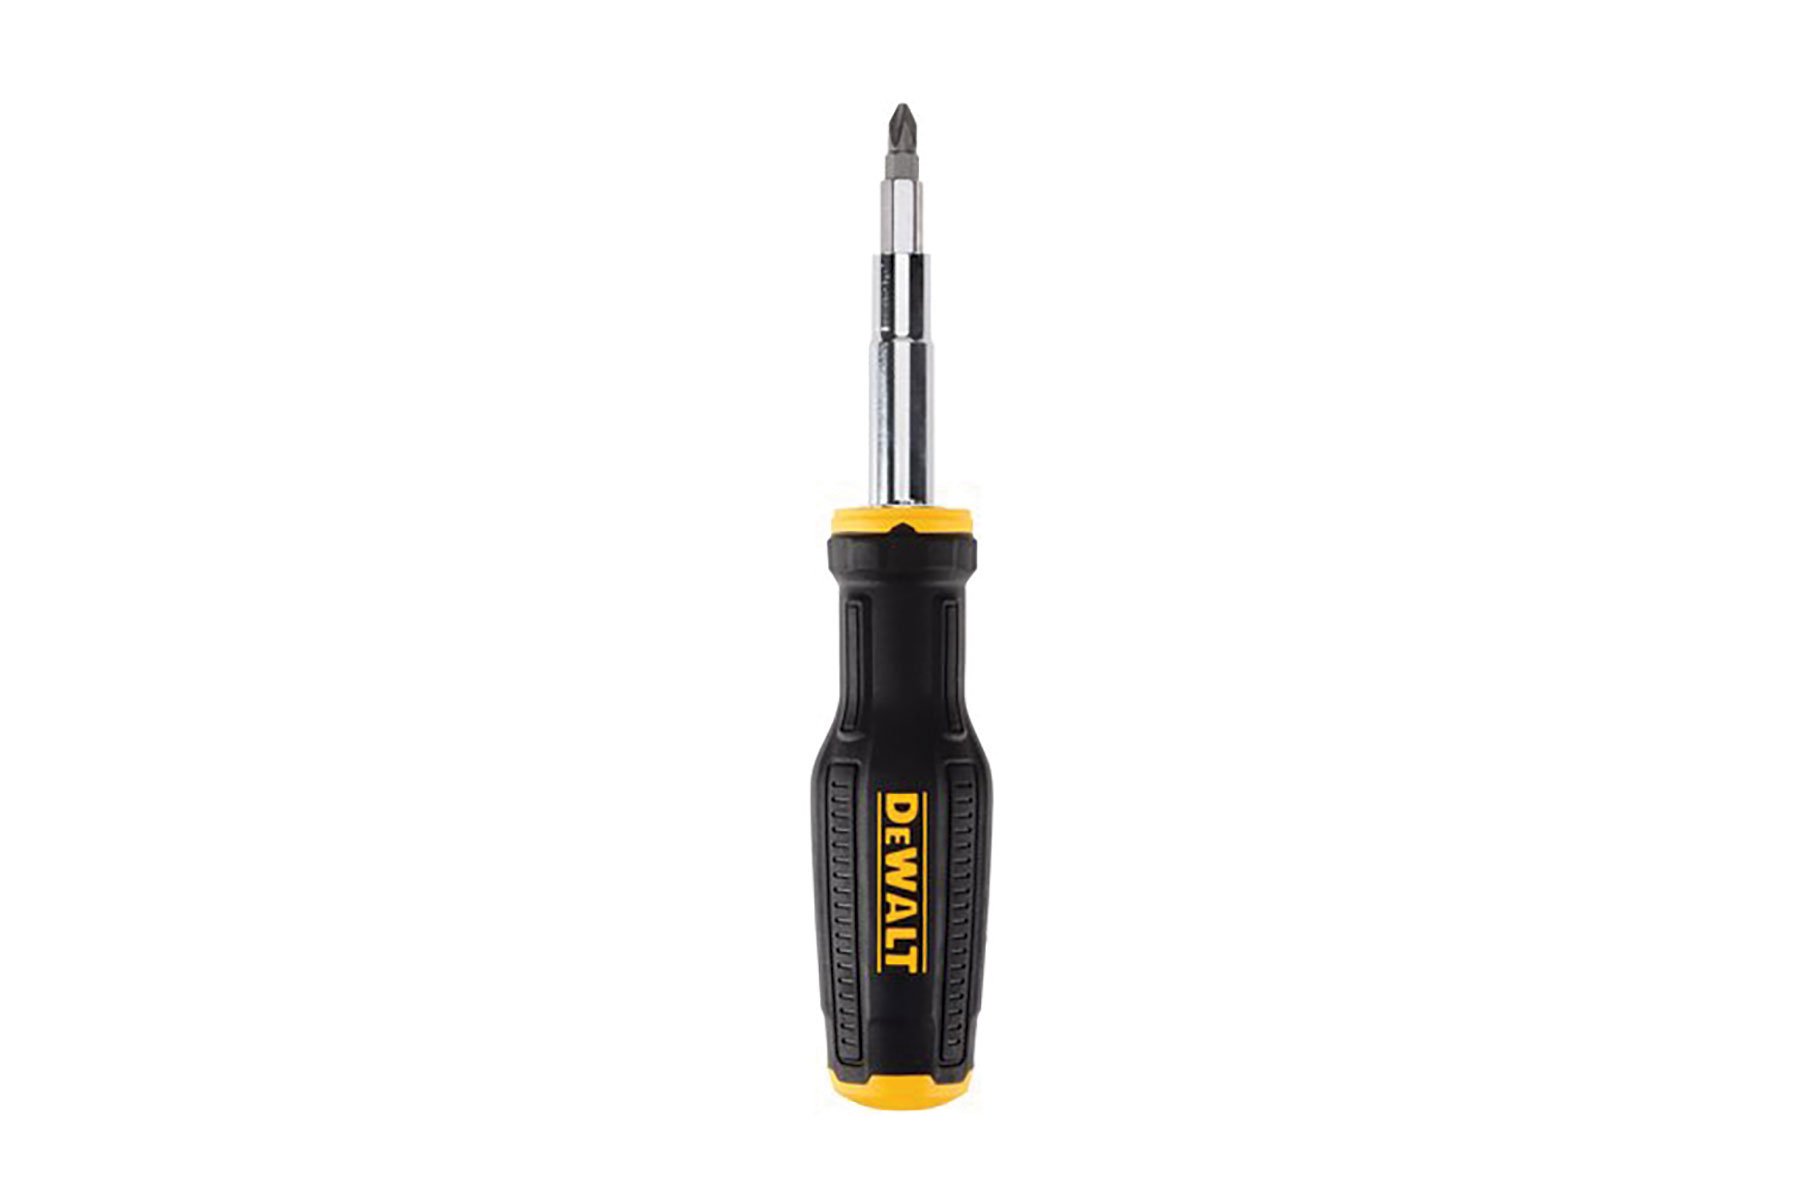 Black and yellow DeWalt screwdriver. Image by DeWalt.